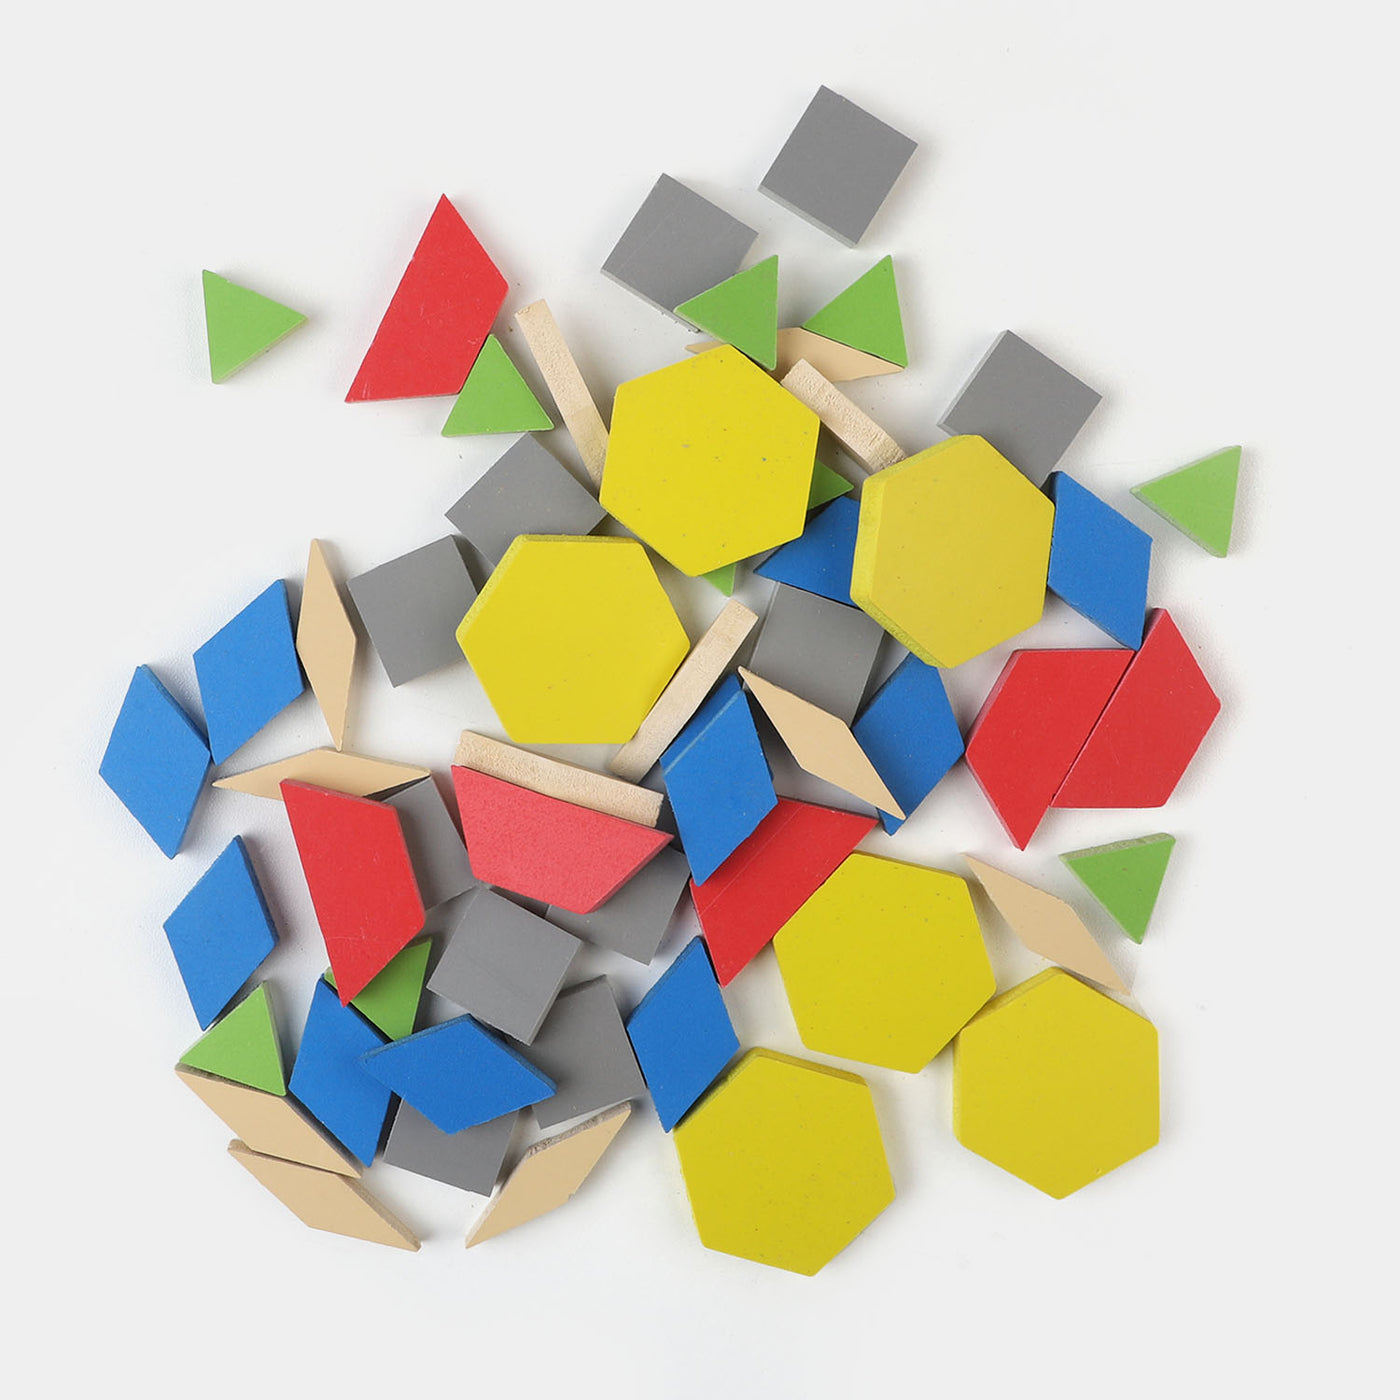 Wooden Puzzle Block Kids Educational Toy | 60PCs